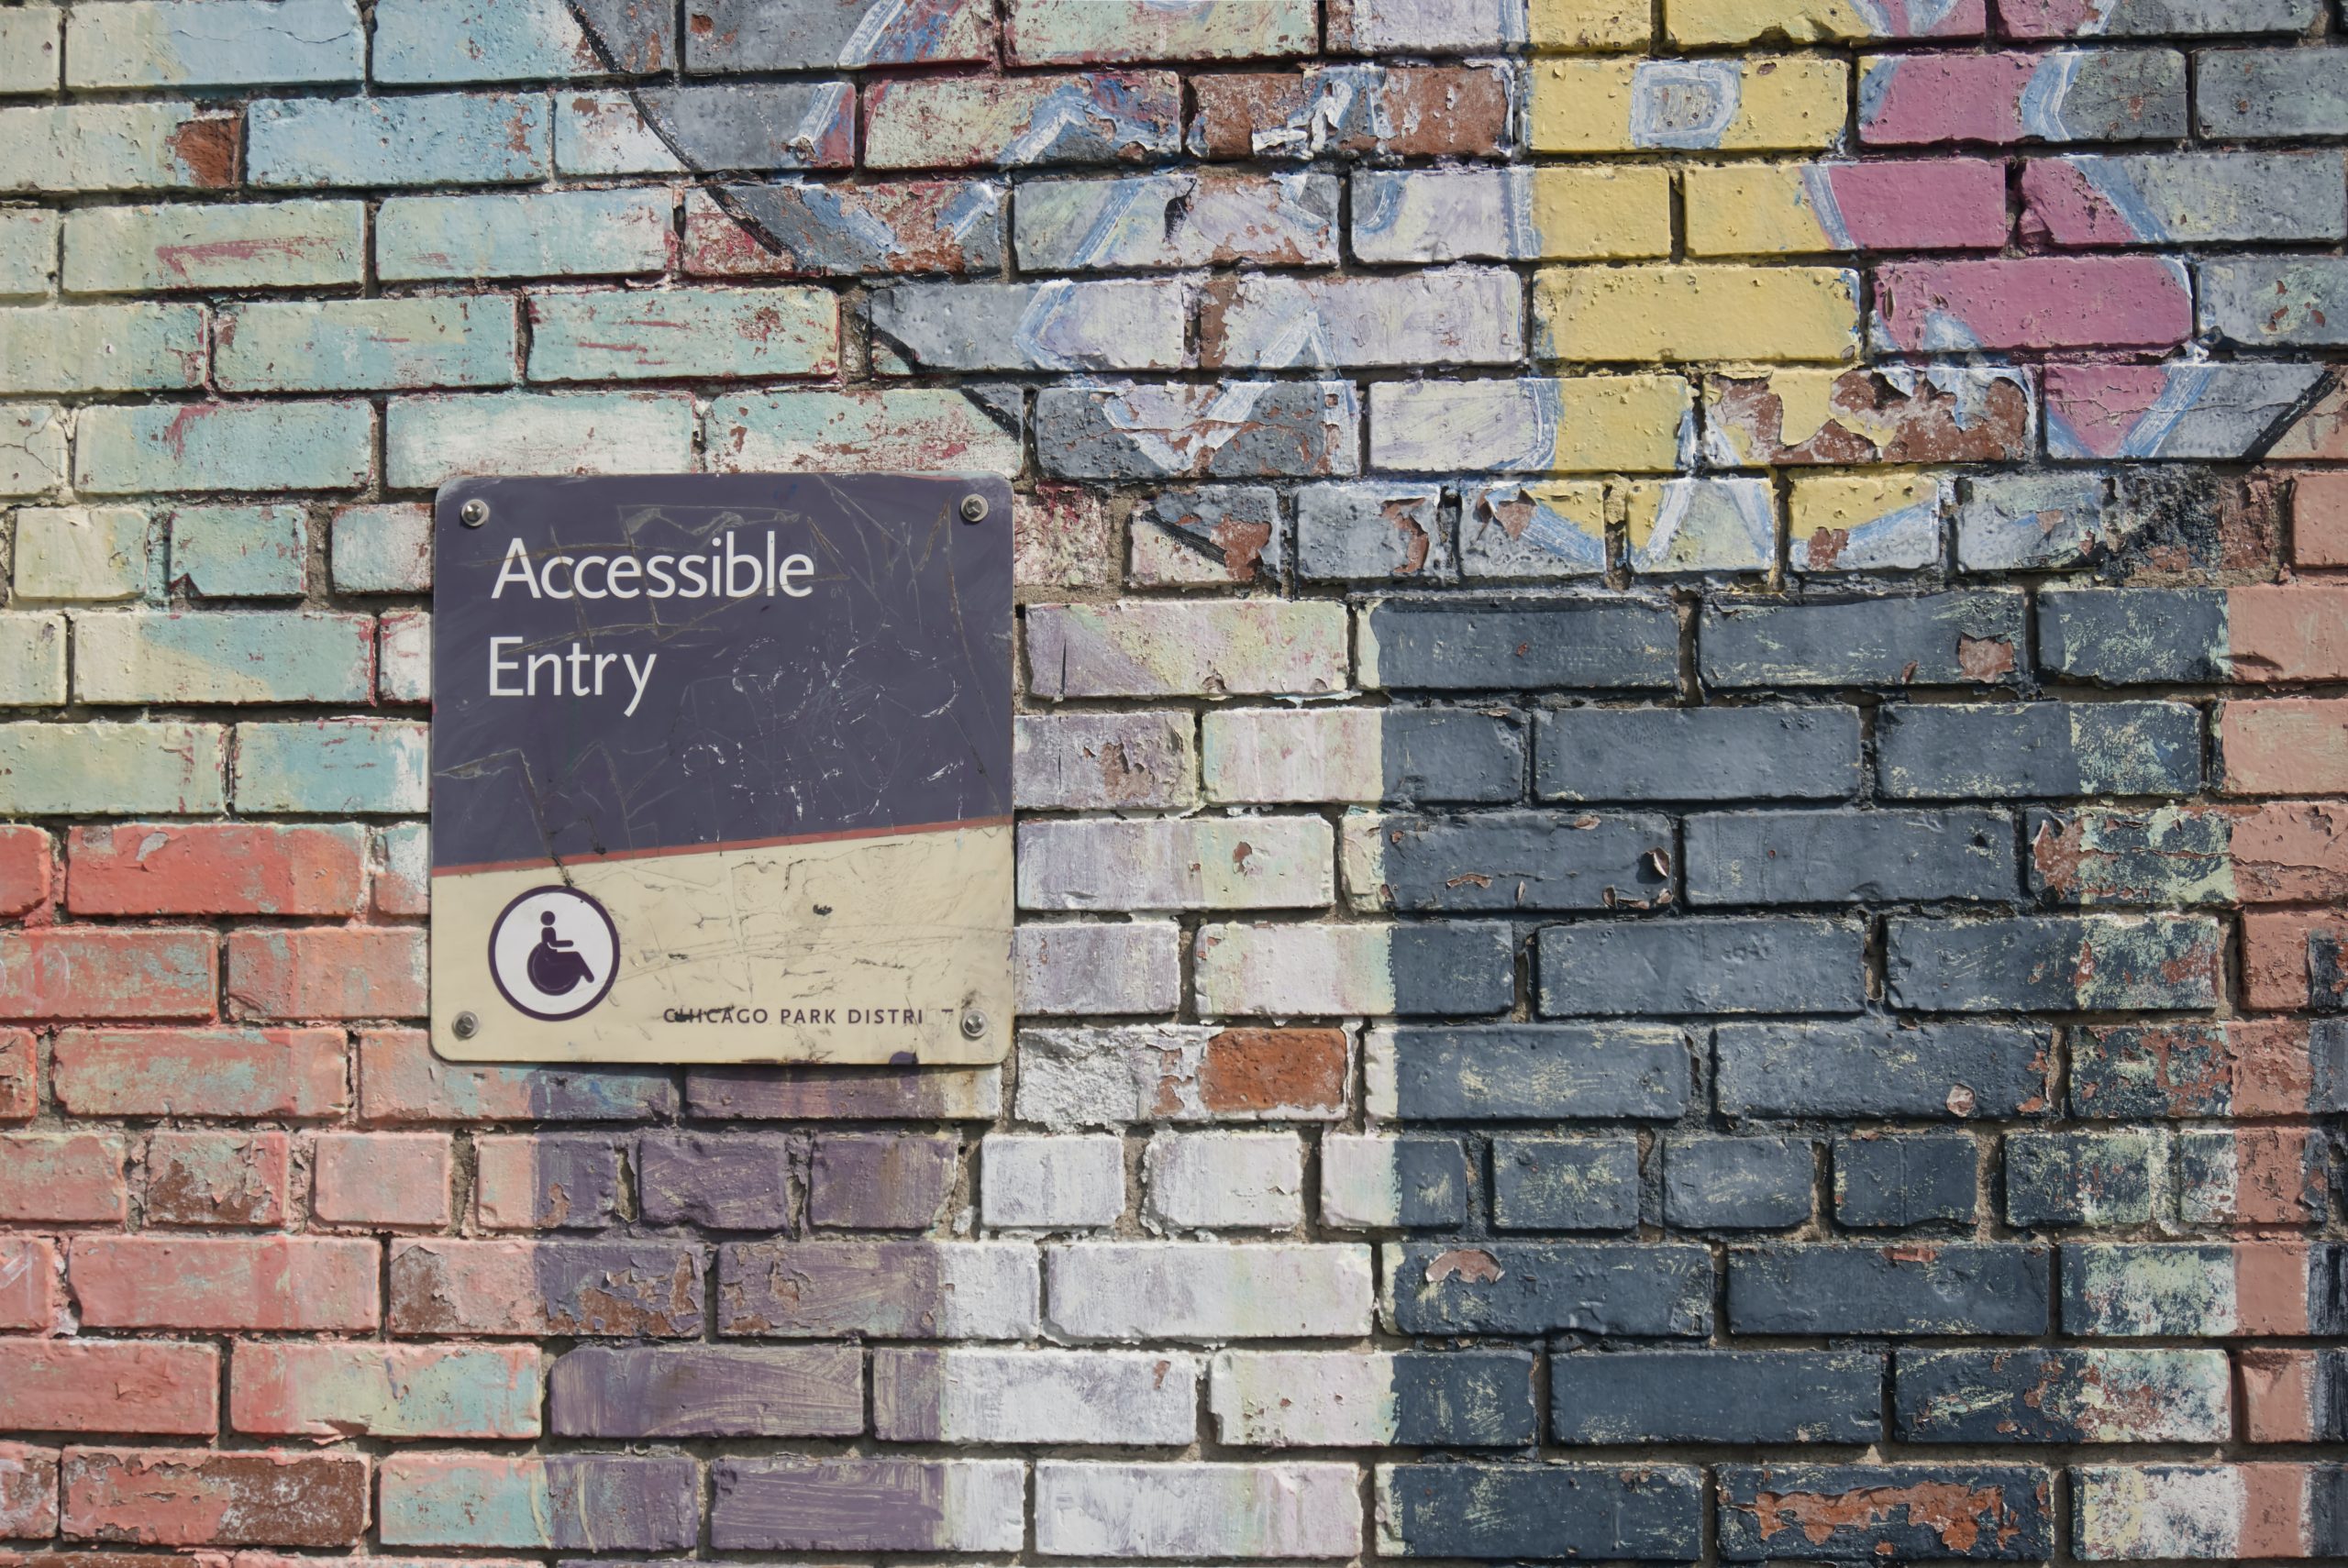 Accessible entry (via Unsplash)